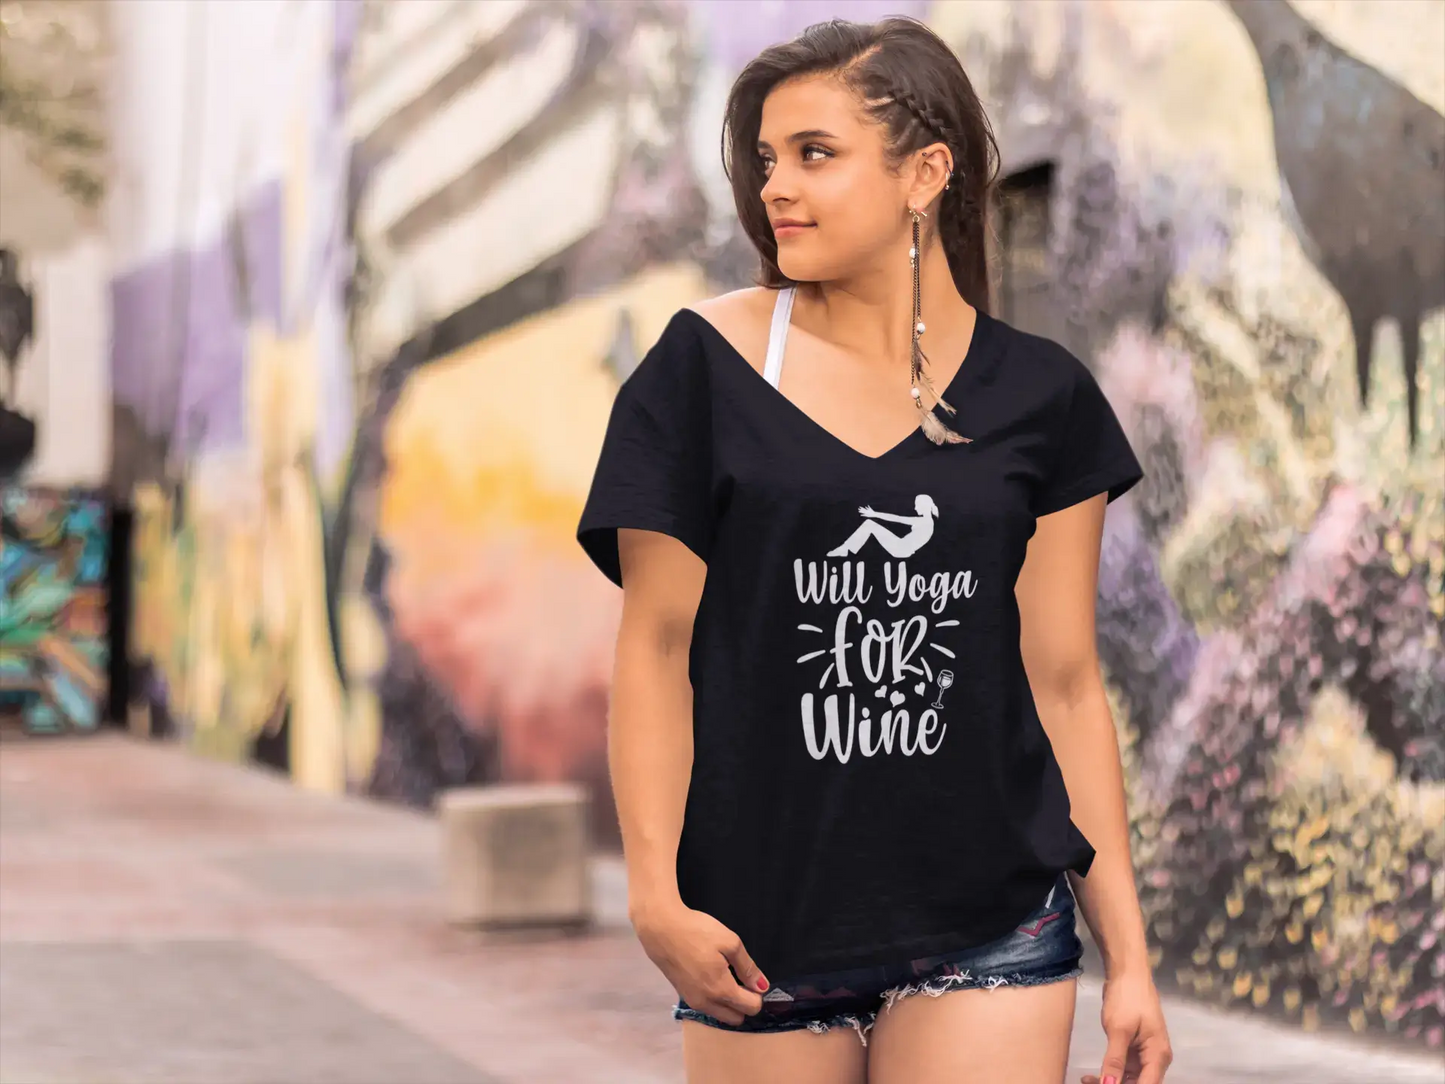 ULTRABASIC Women's T-Shirt Will Yoga For Wine - Funny Tee Shirt